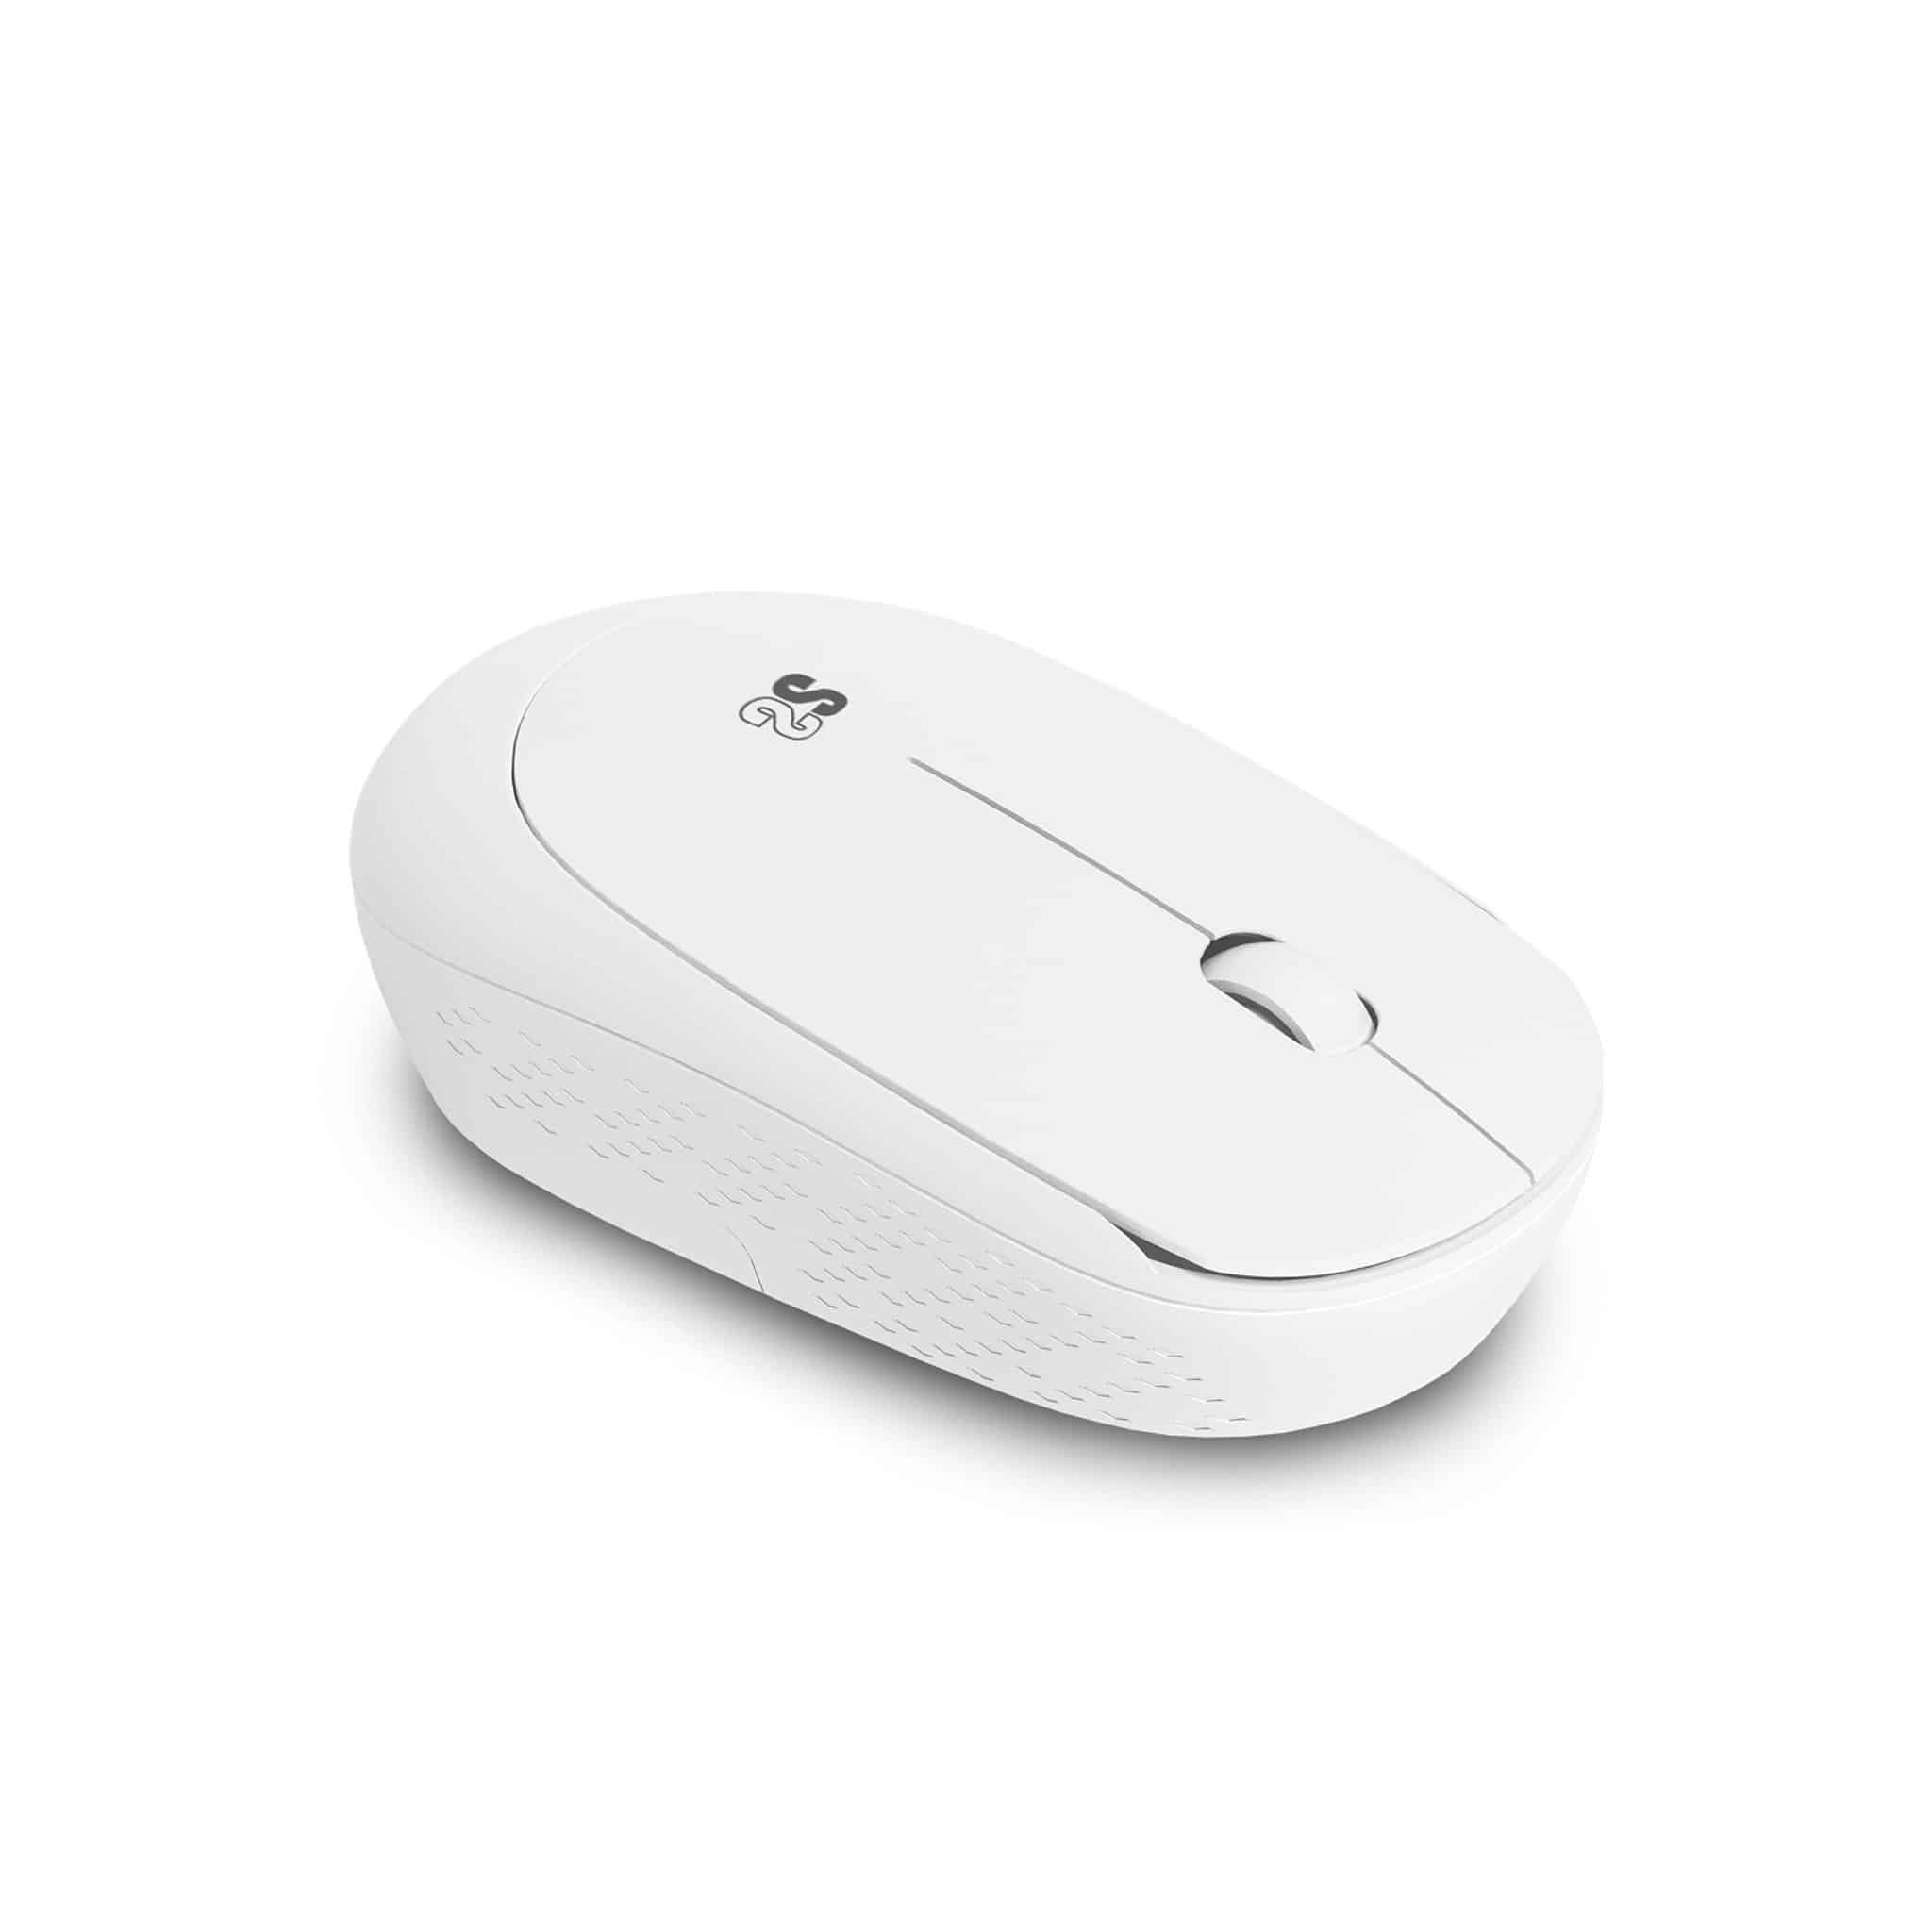 Ratón de ordenador blanco sin cables con receptor usb de clic silencioso para trabajo de oficina